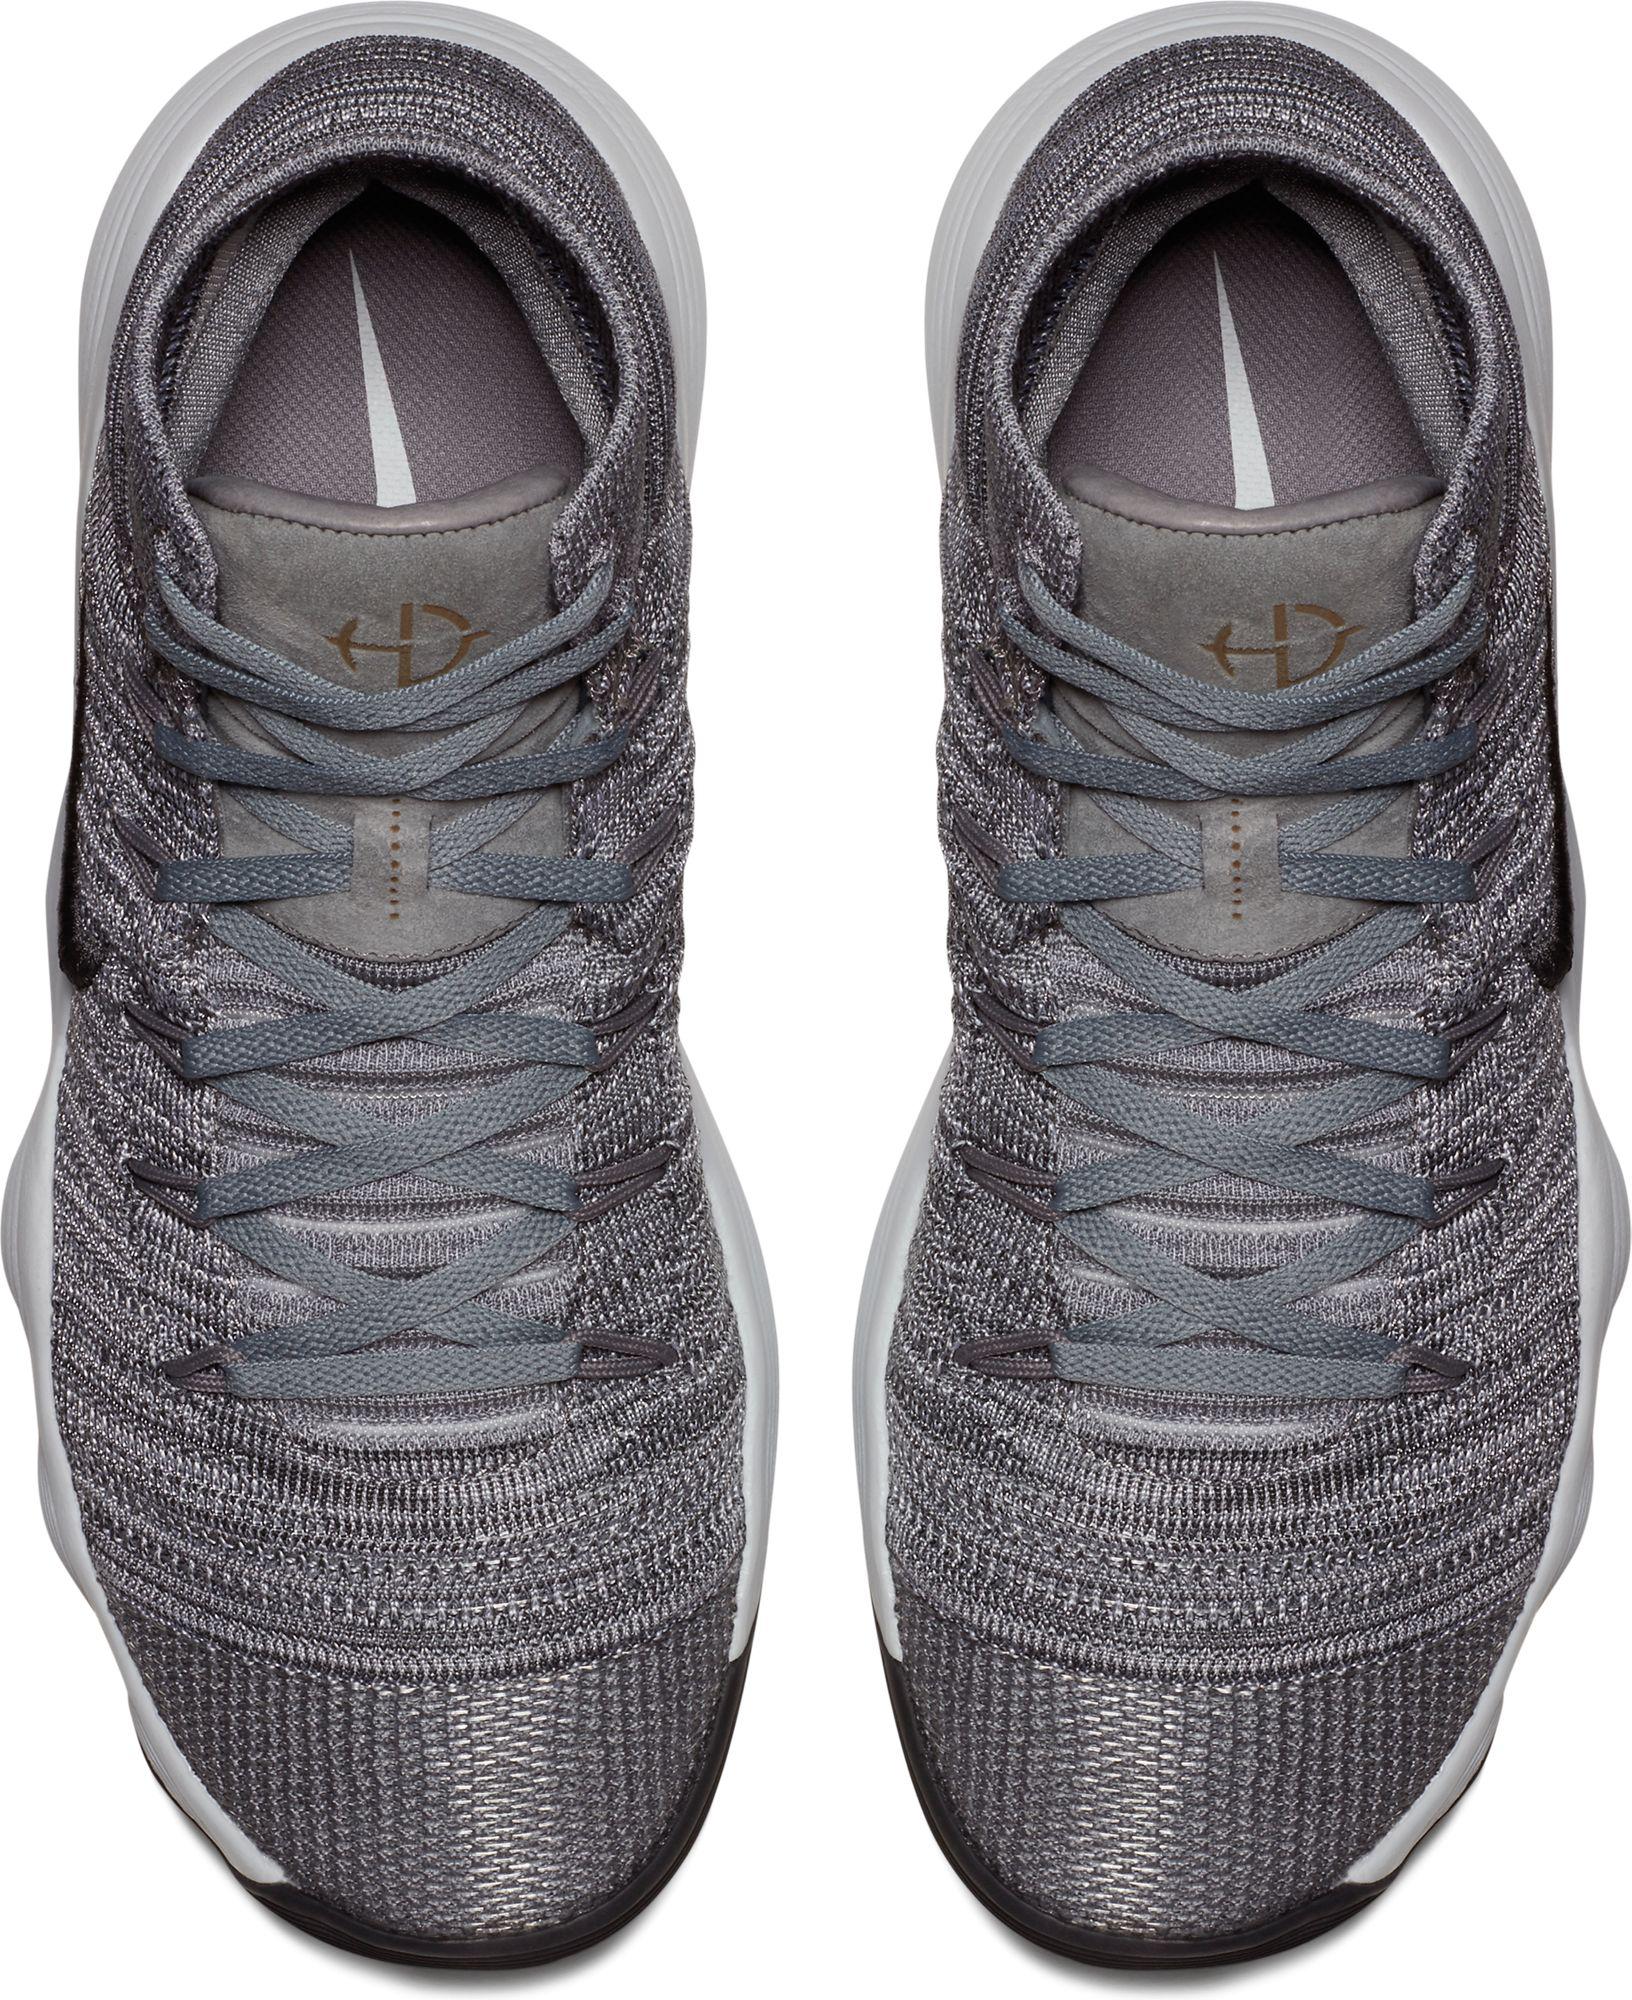 Lyst - Nike React Hyperdunk 2017 Flyknit Basketball Shoes in Gray for Men